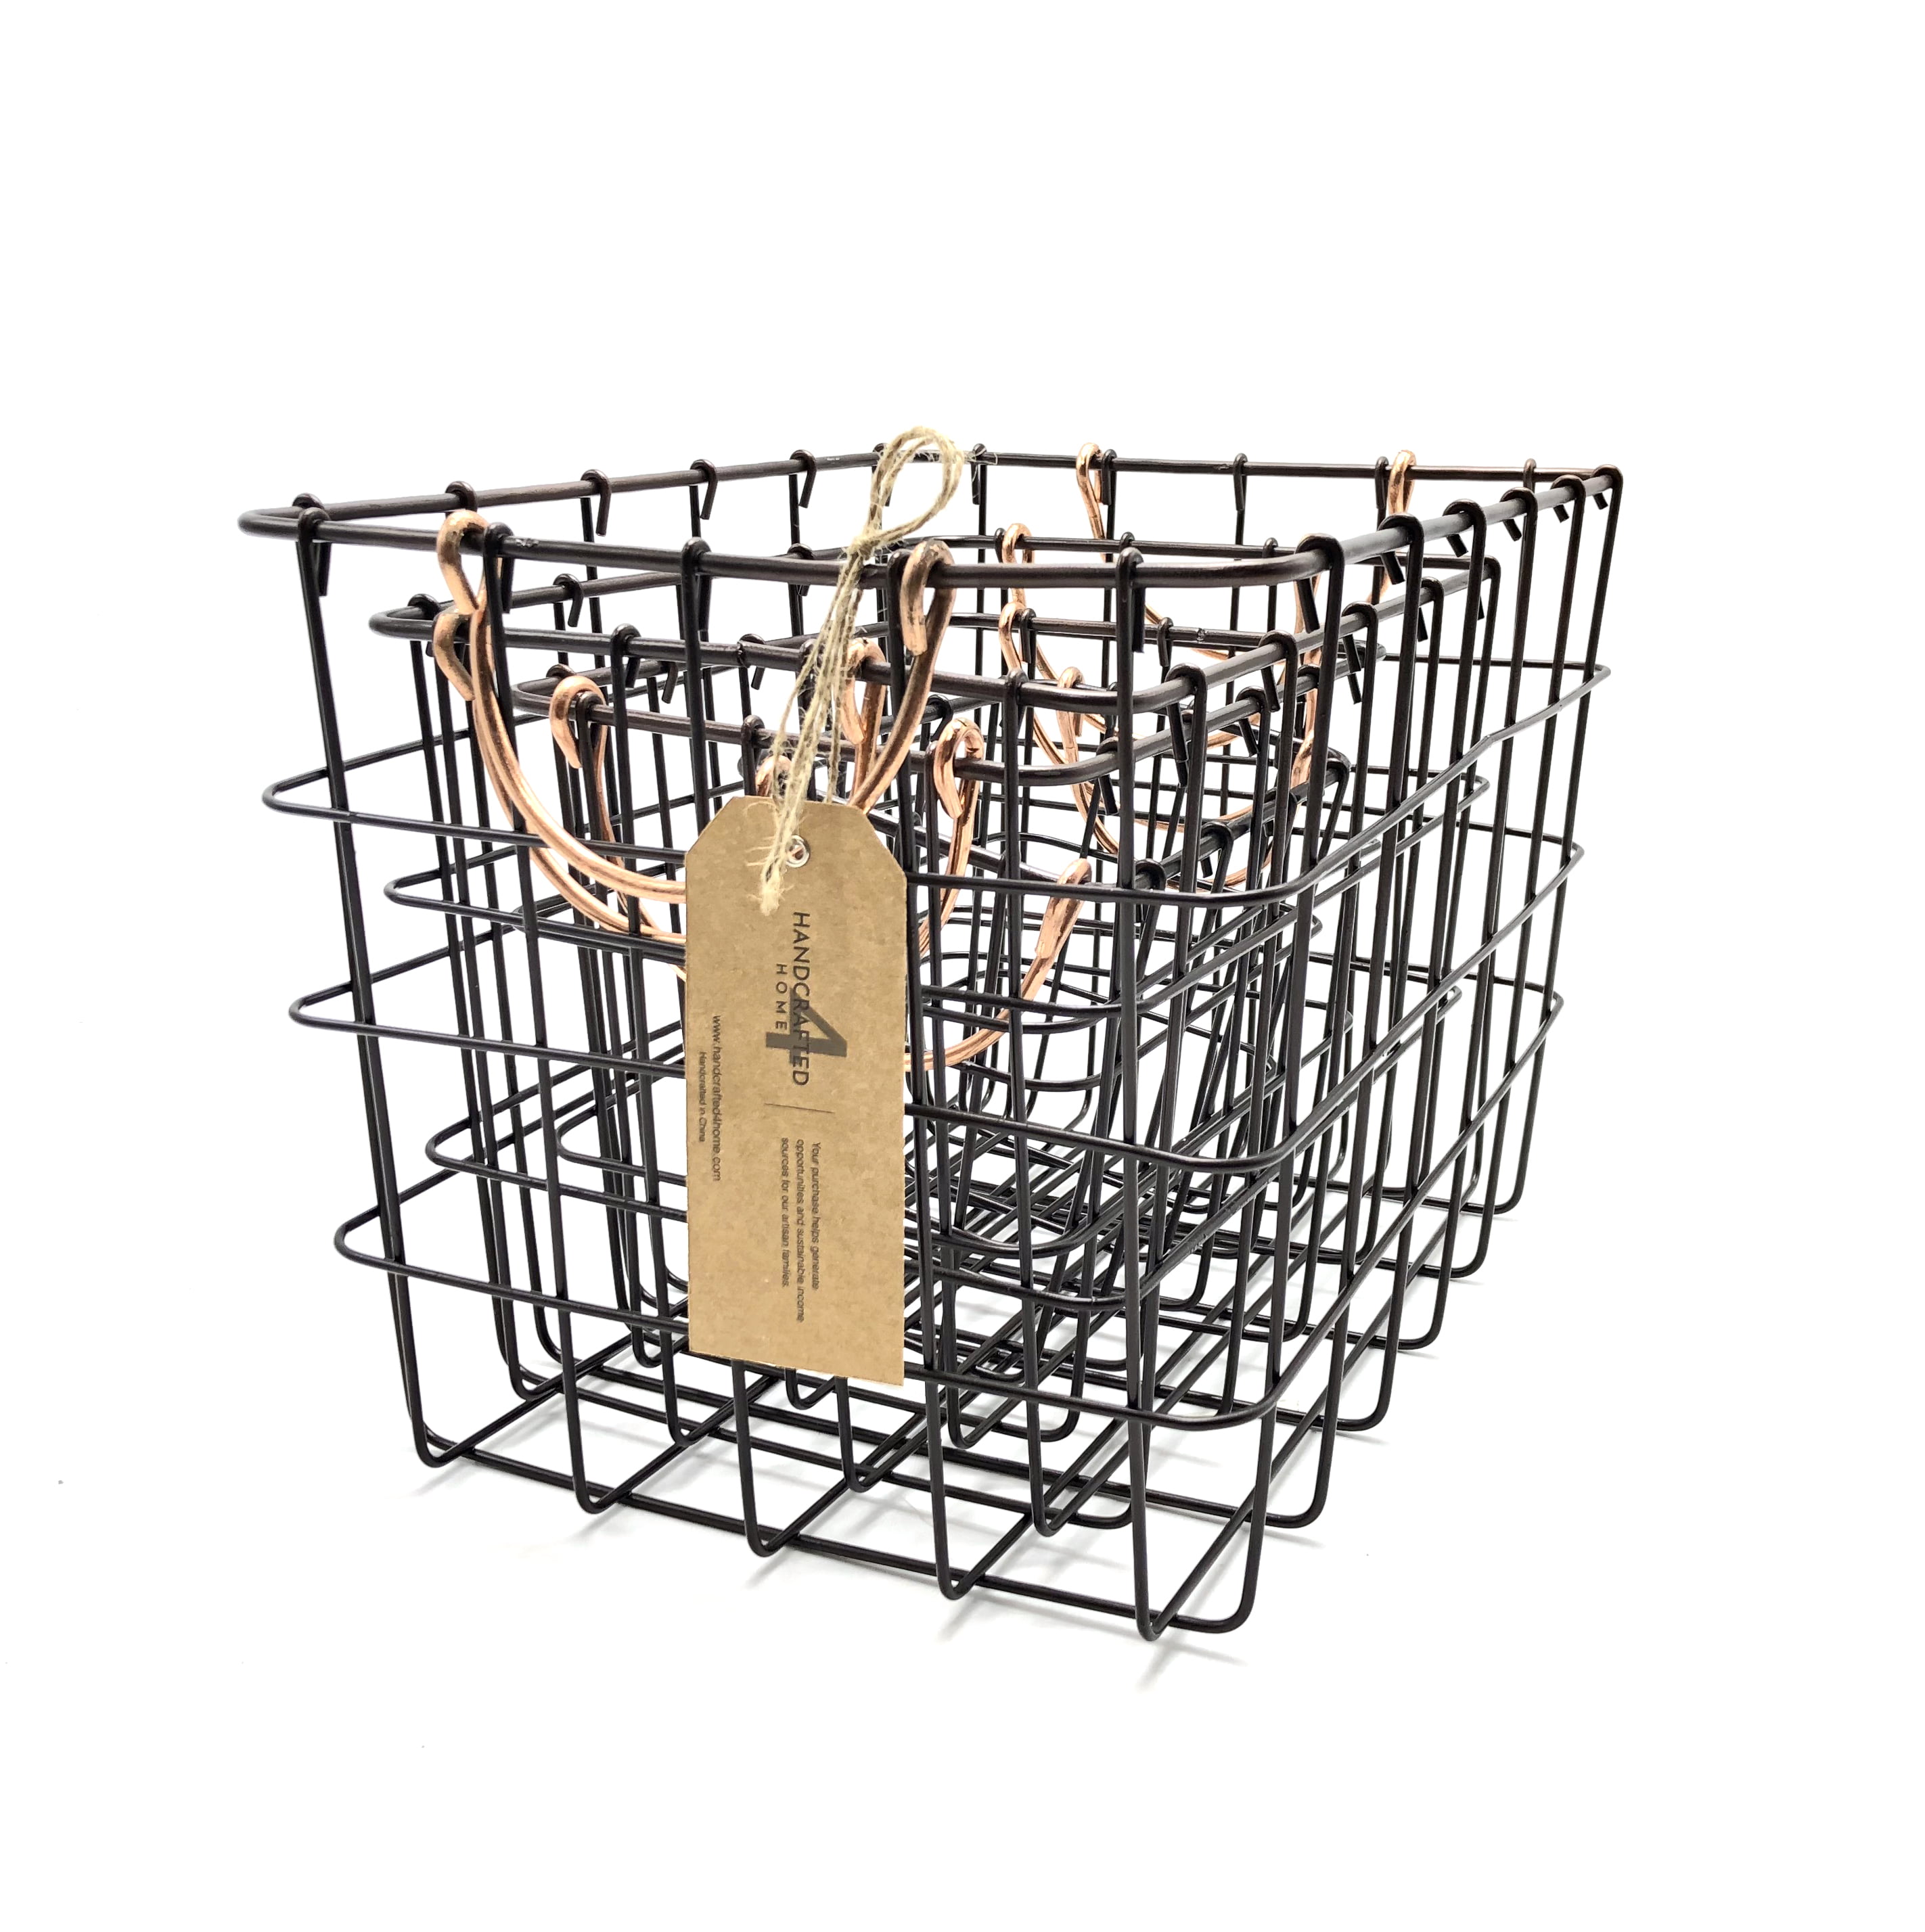 Vintage Wire Baskets Nesting Baskets